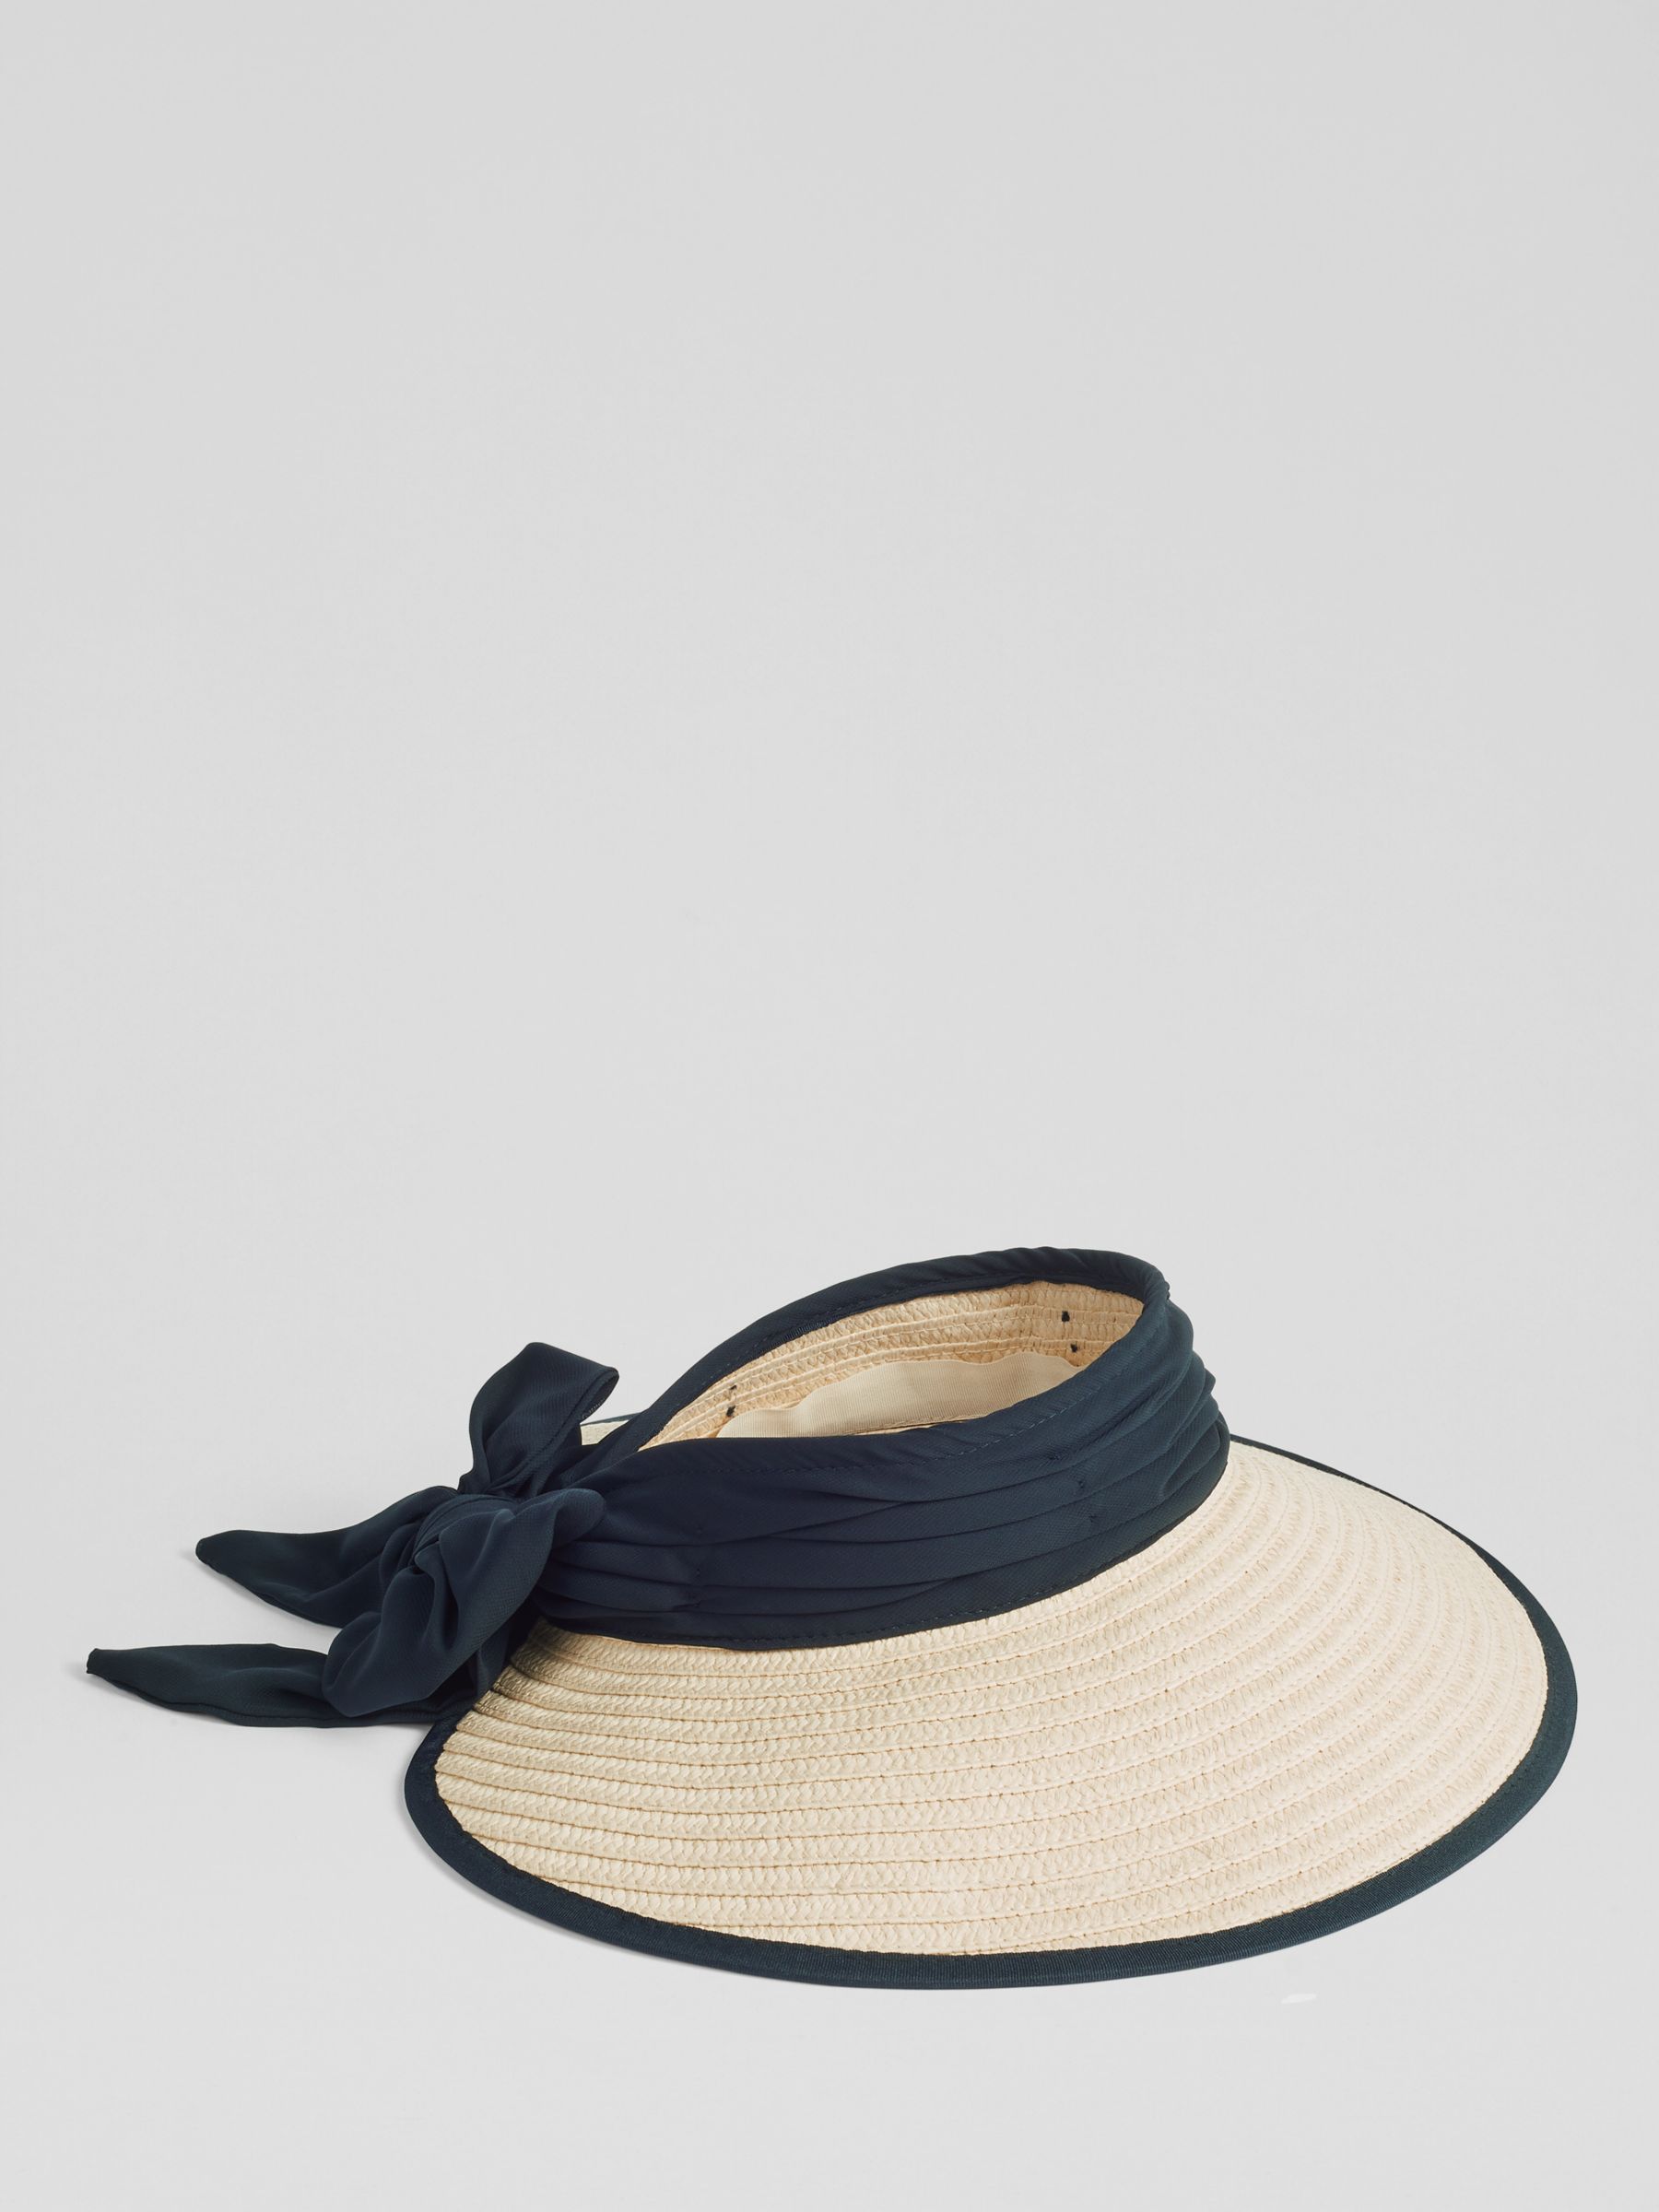 L.K.Bennett Rosemary Raffia Hat, Natural, One Size